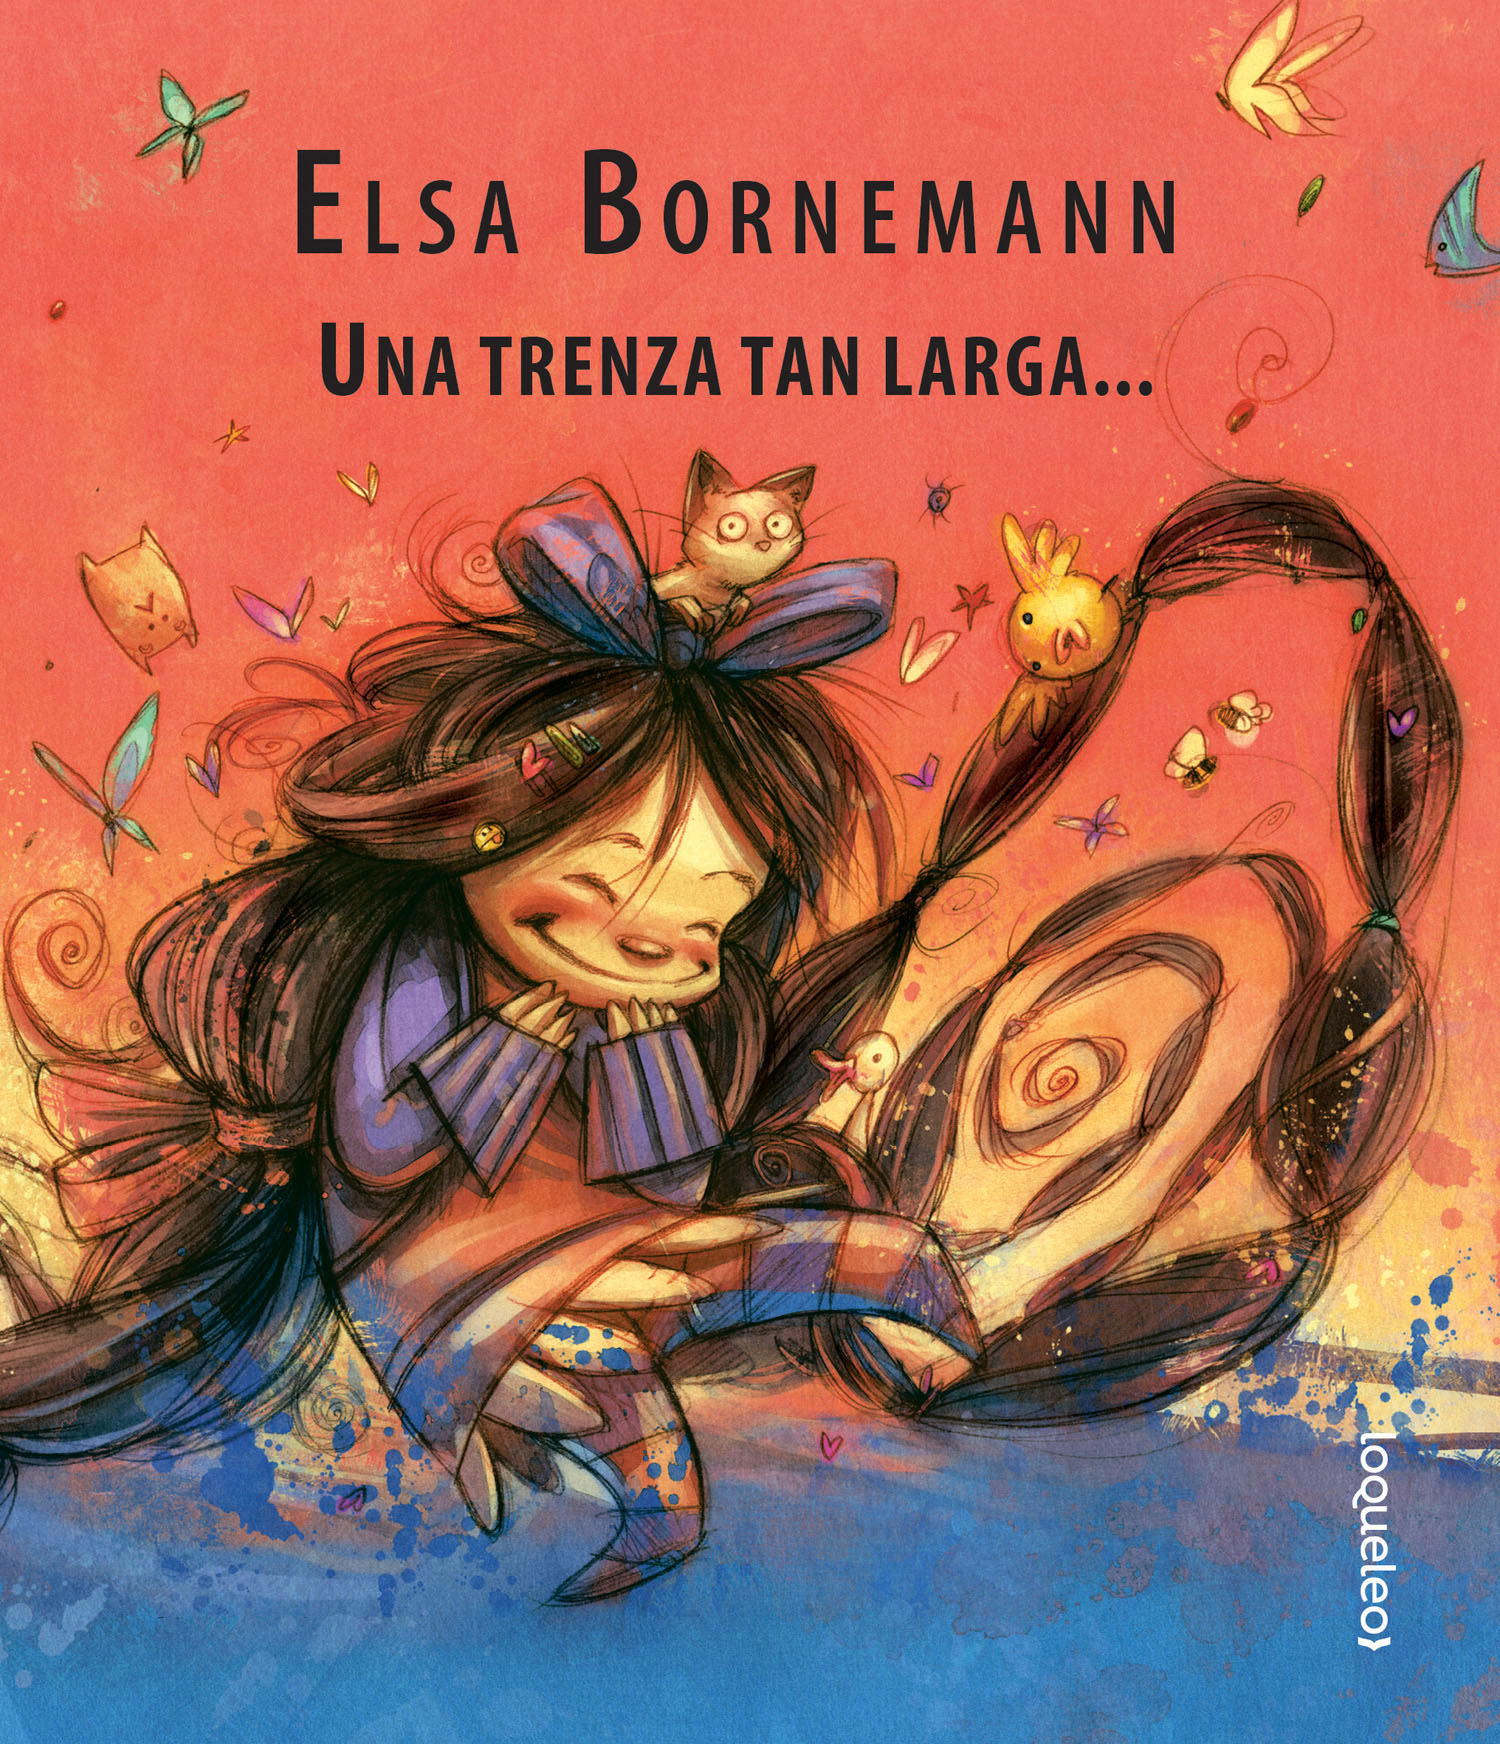 ¡Socorro! by Elsa Bornemann